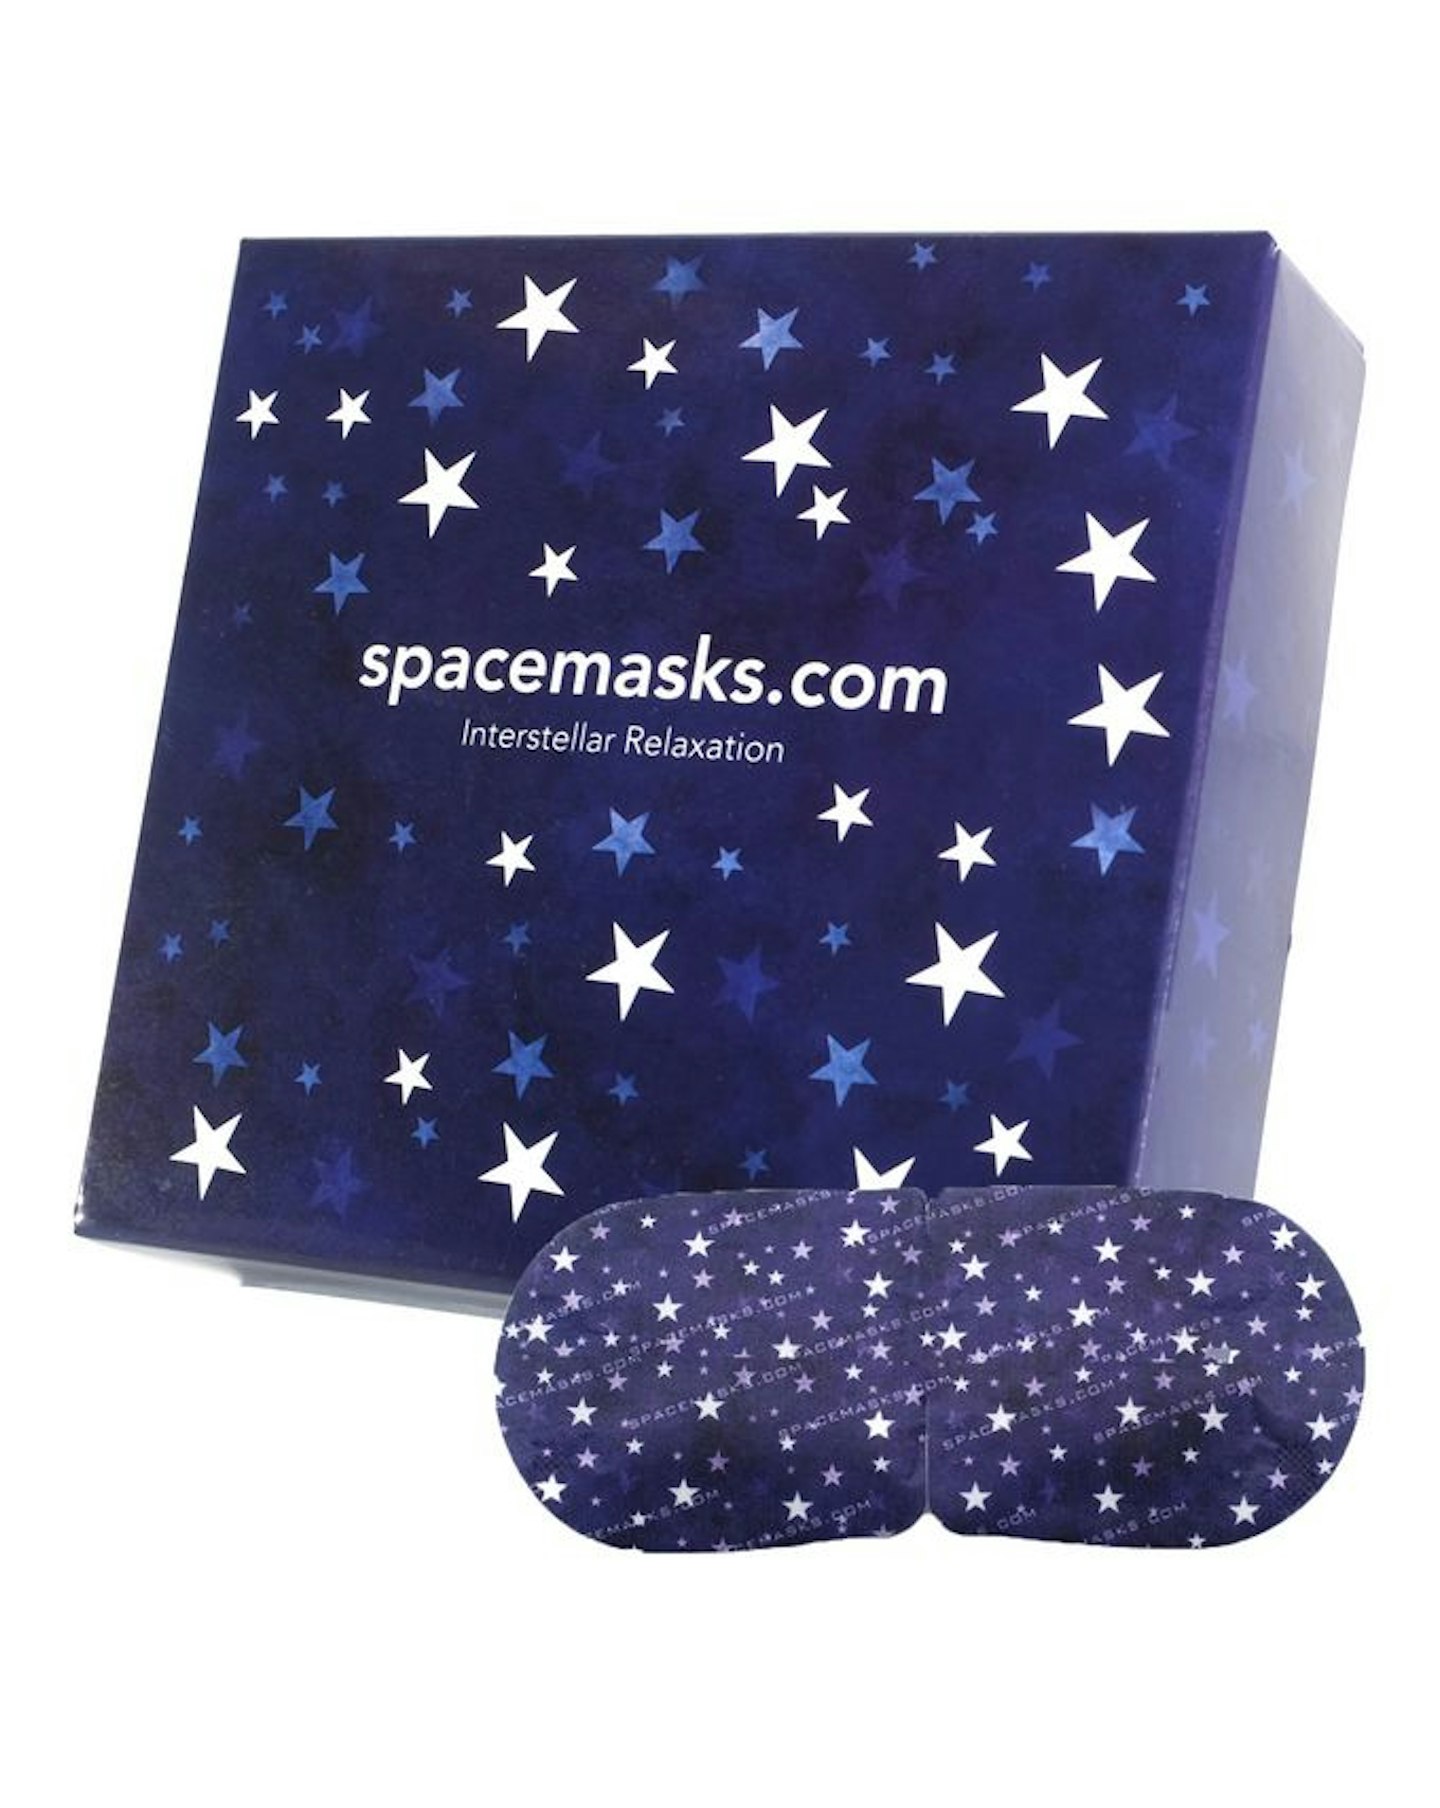 Best sleep mask: Spacemasks(5 x masks)